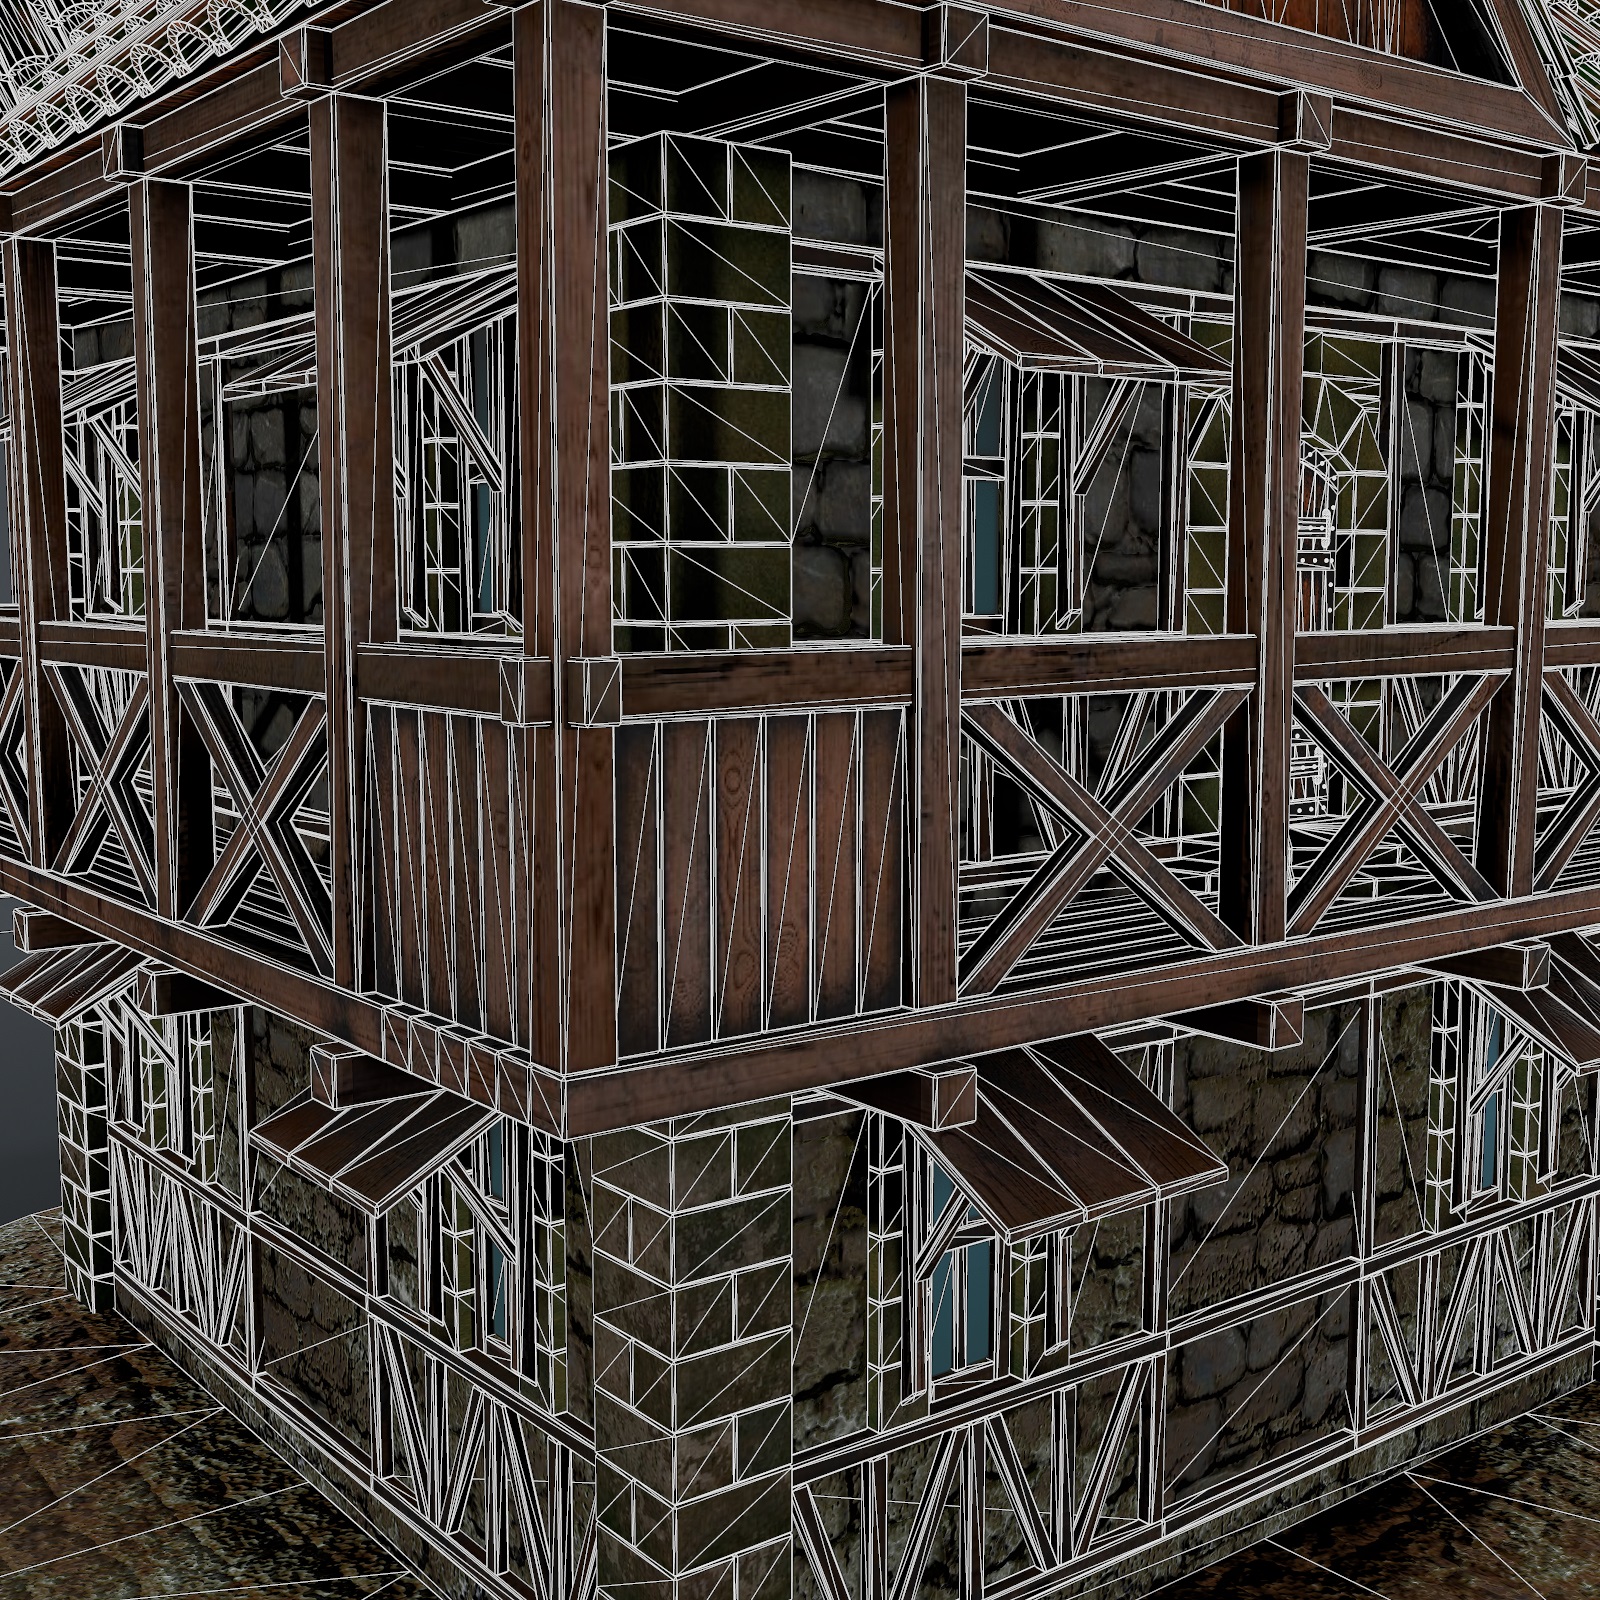 3d Medieval house 3d model model buy - render